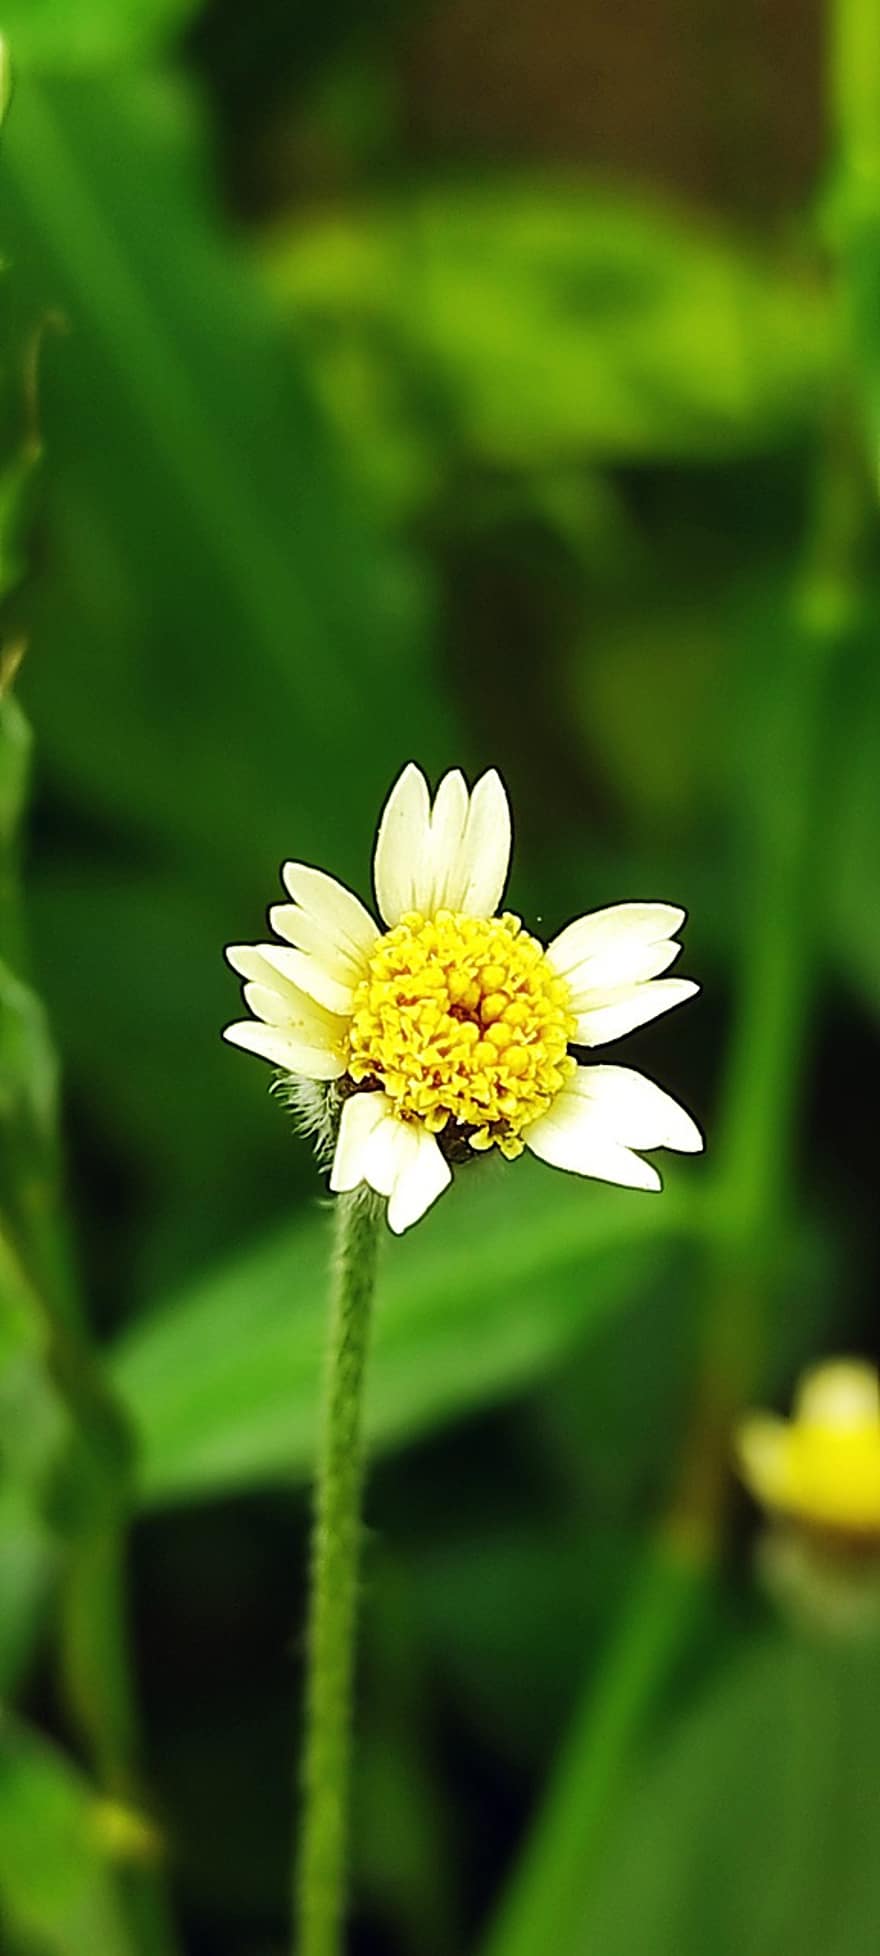 Shaggy Soldier, Flower, Plant, Peruvian Daisy, White Flower, Petals, Bloom, Spring, Nature